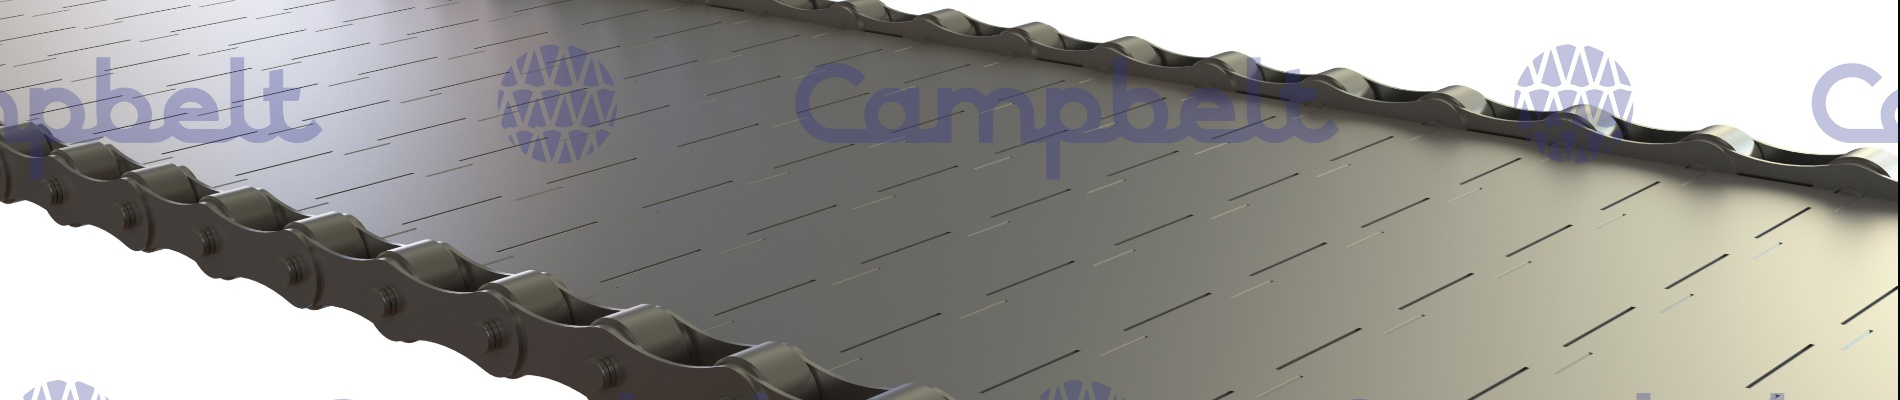 Campbelt | Plate link metal belts (CT-LP)